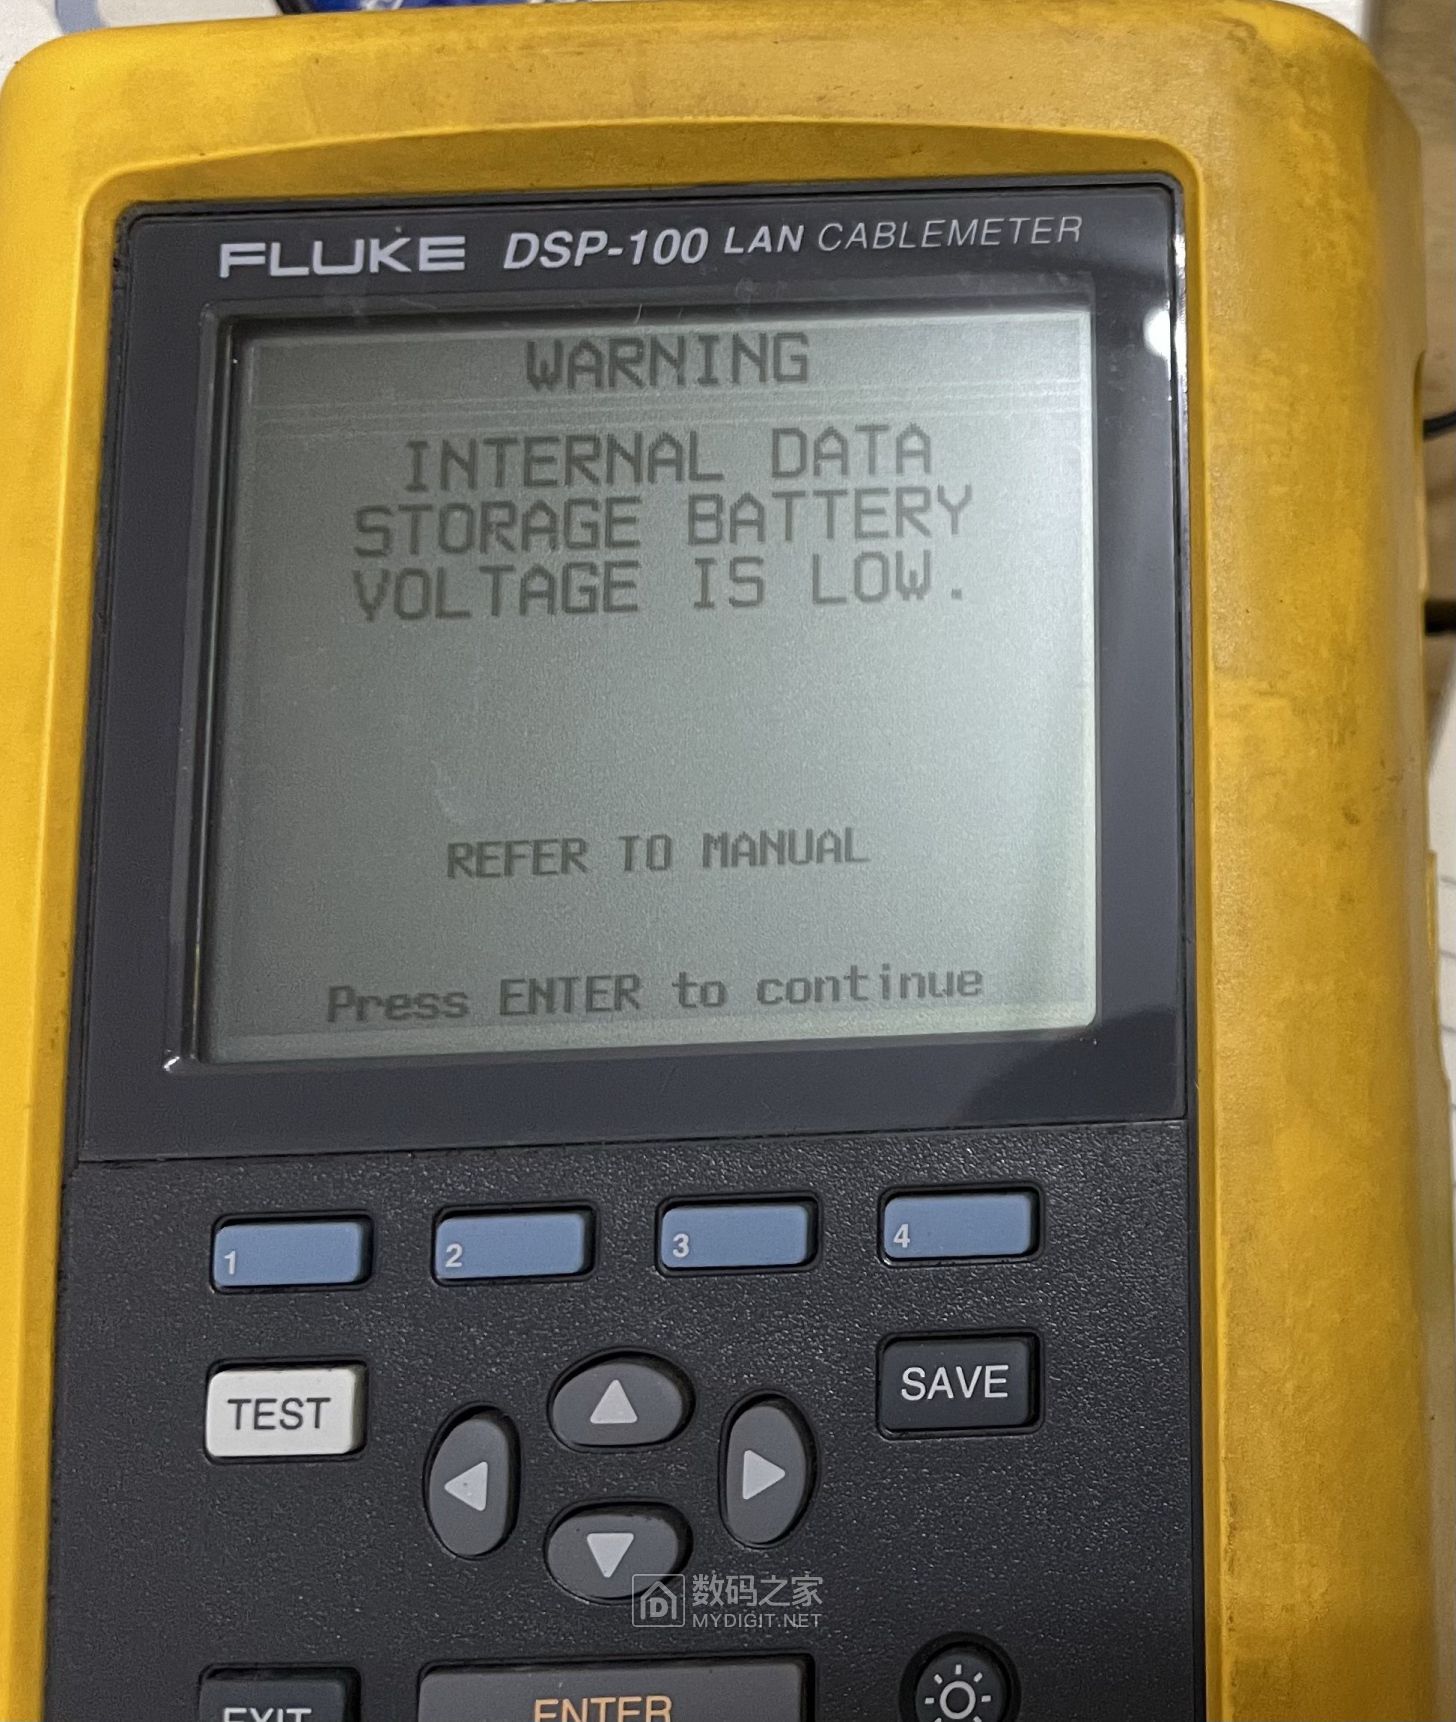 internal data storage battery voltage is low